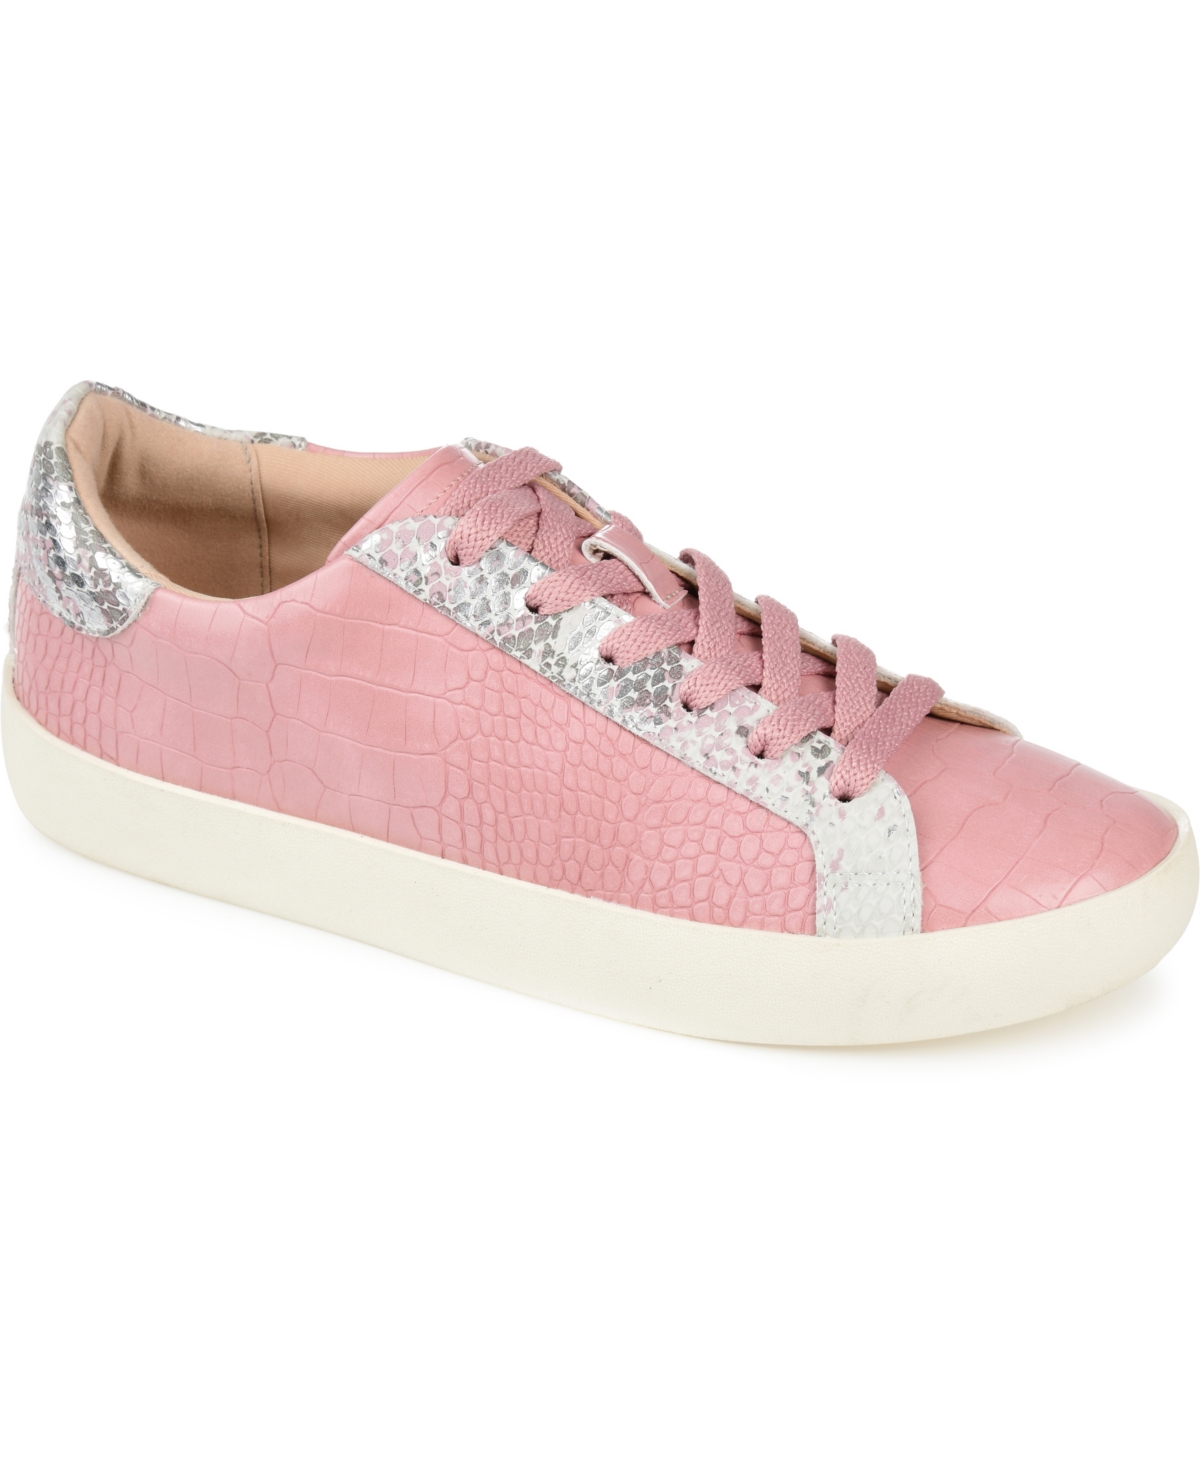 Women's Camila Sneakers - Pink